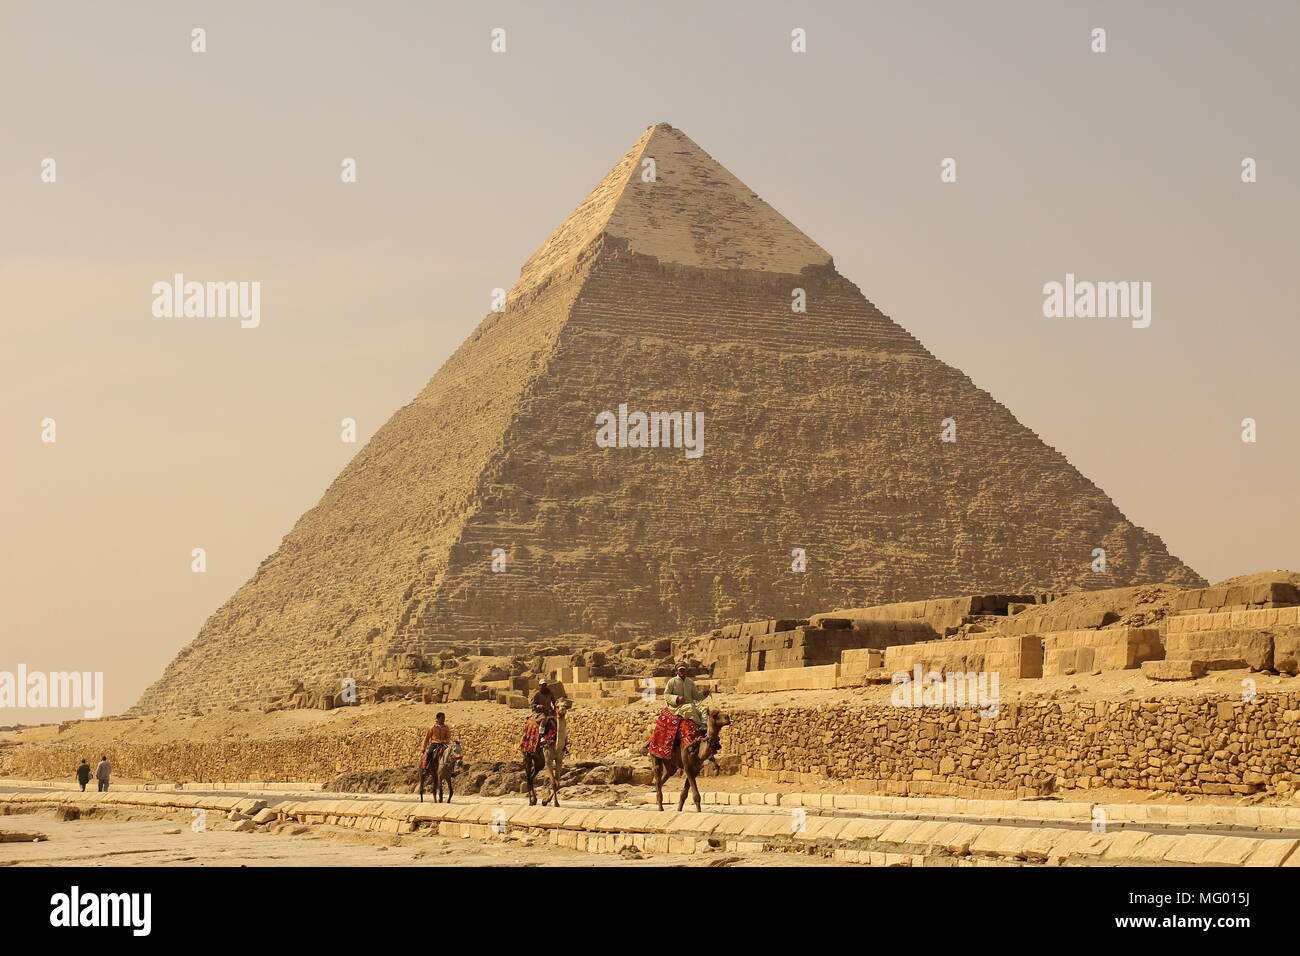 The pyramids of Egypt Stock Photo